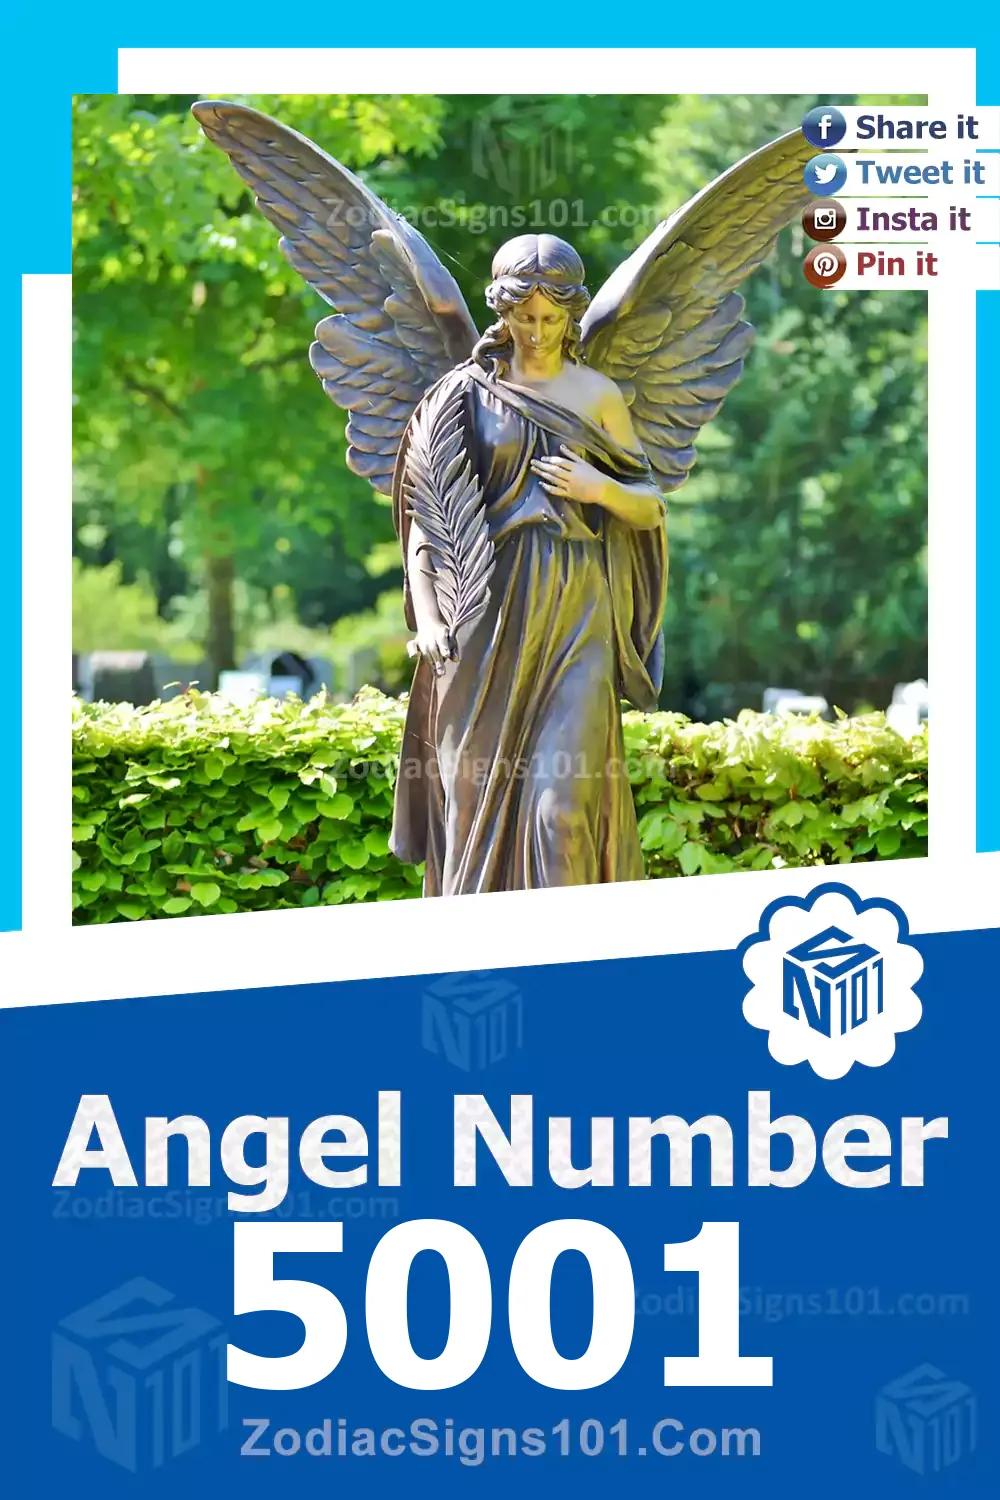 5001-Angel-Number-Meaning.jpg